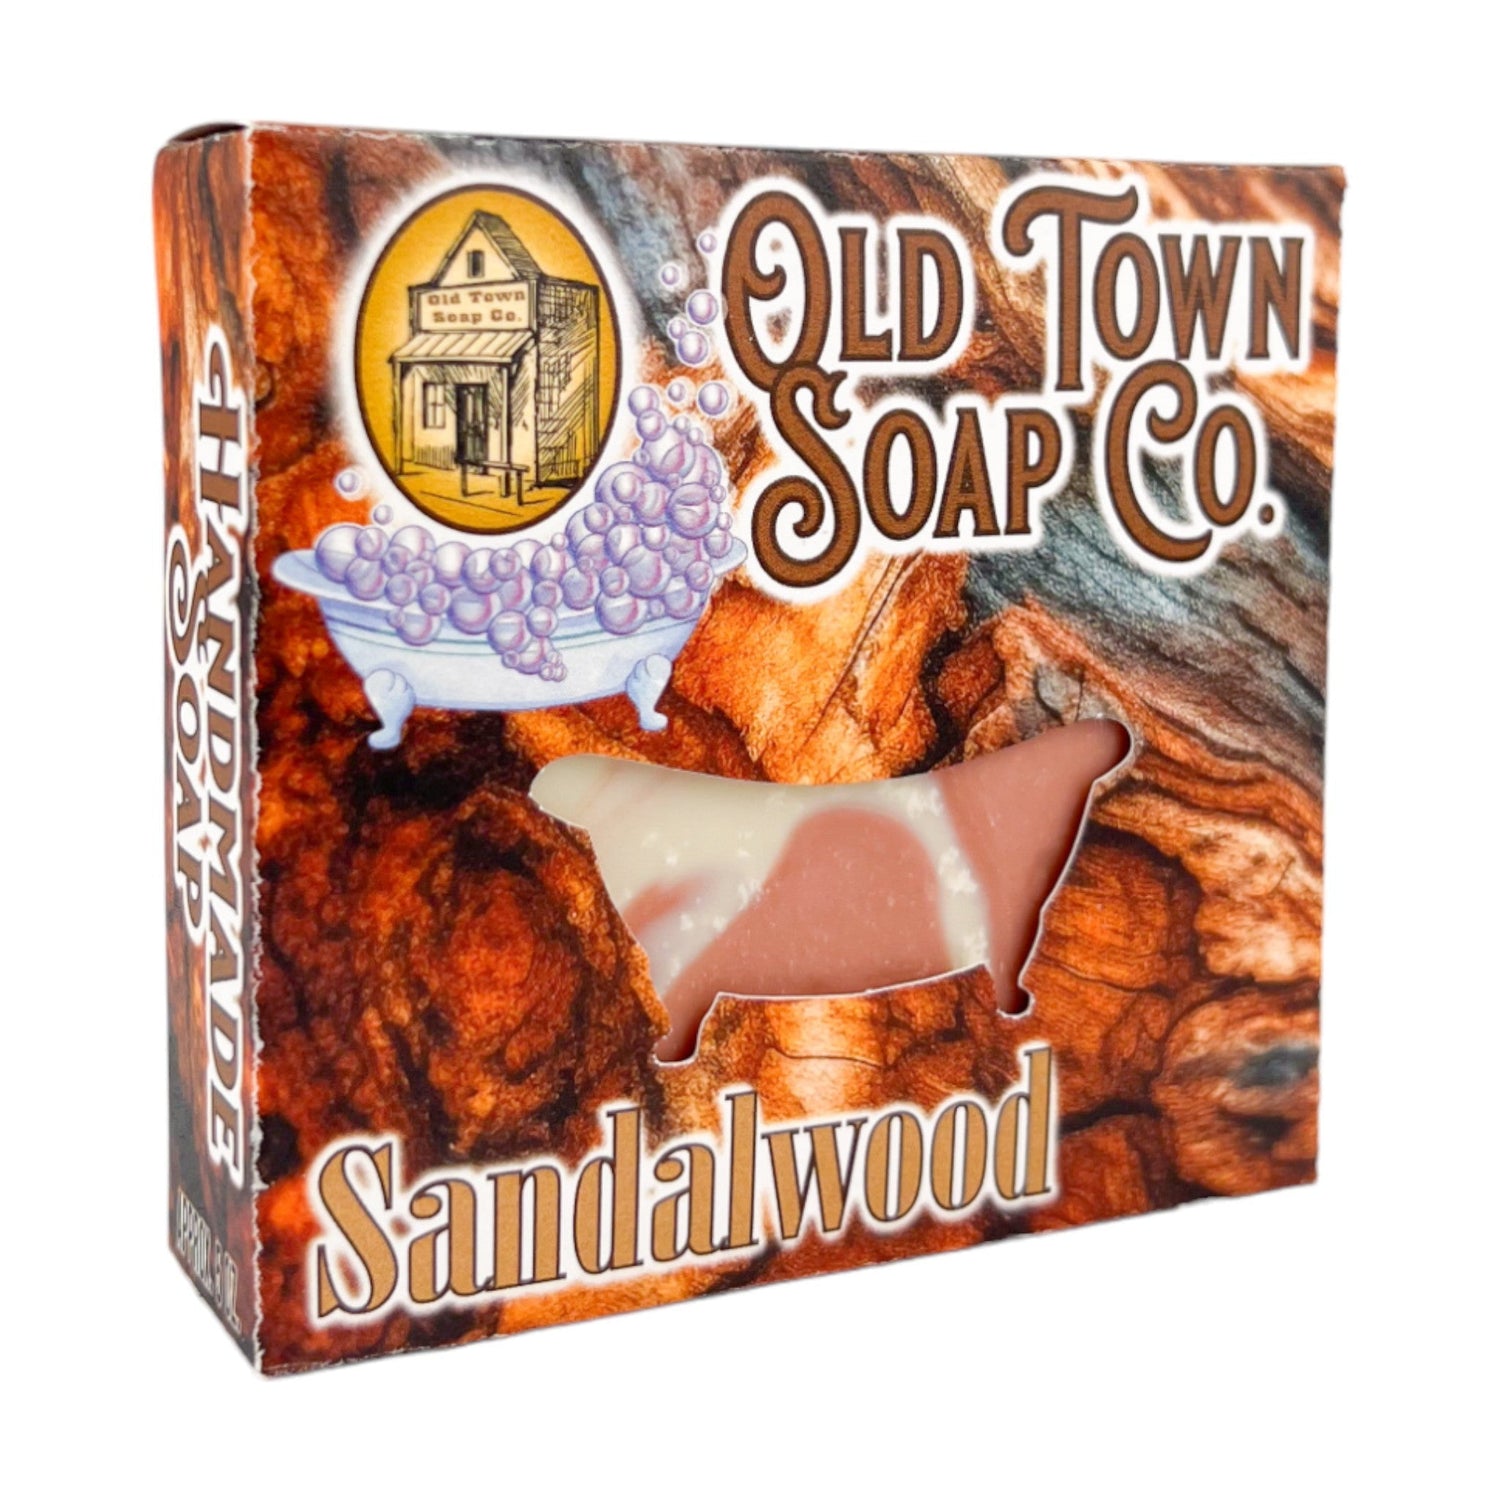 Sandalwood -Bar Soap - Old Town Soap Co.